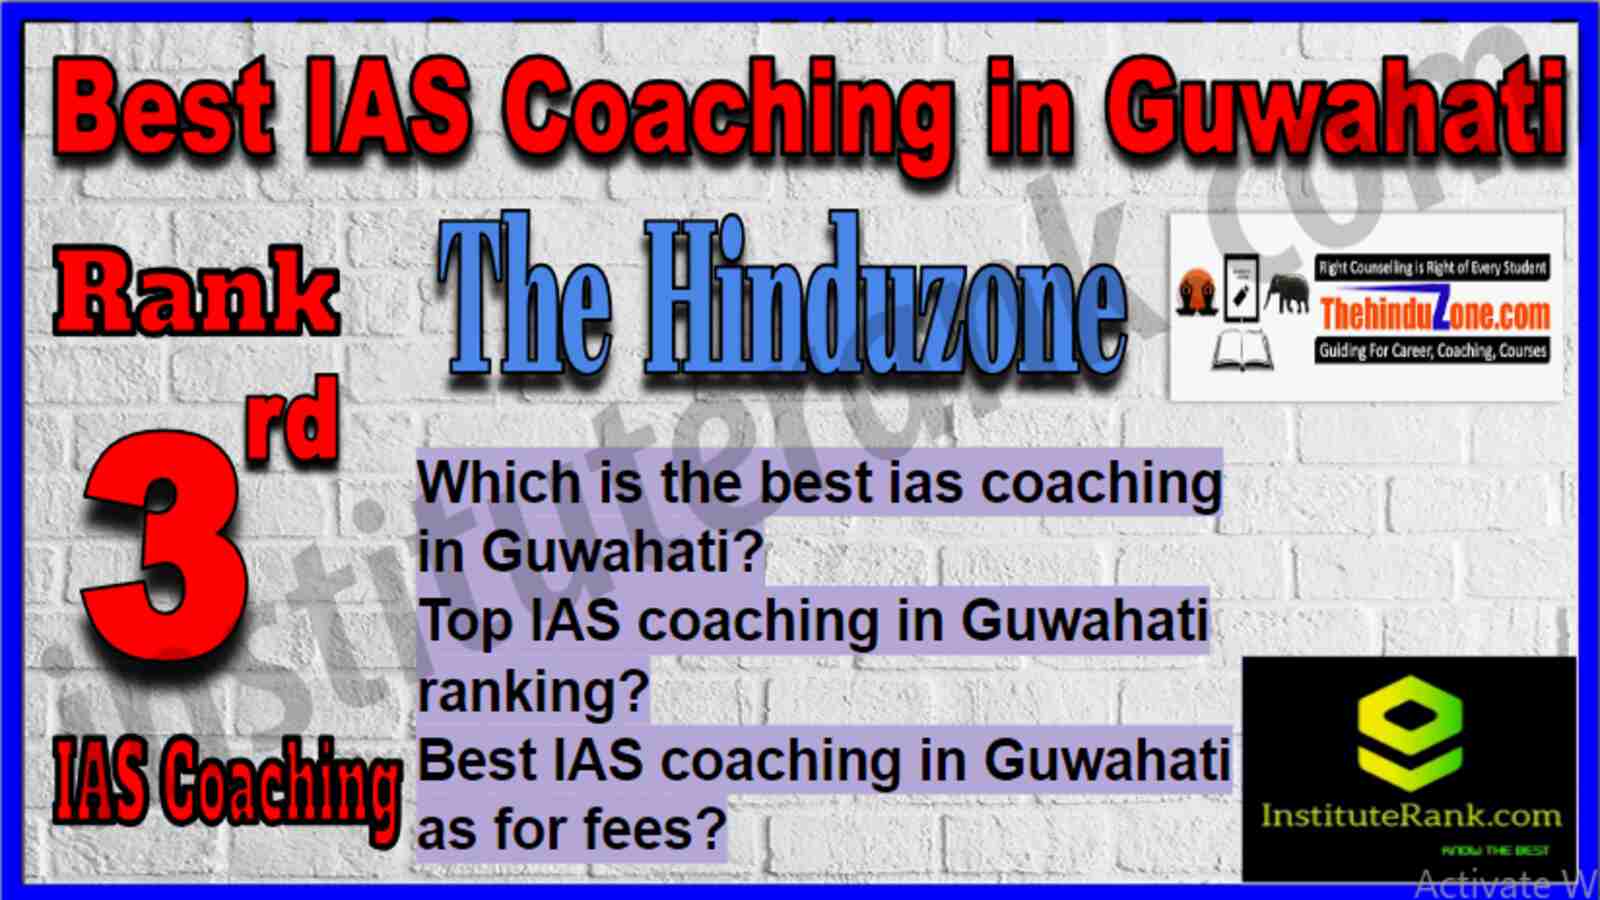 Rank 3 Best IAS Coaching in Guwahati